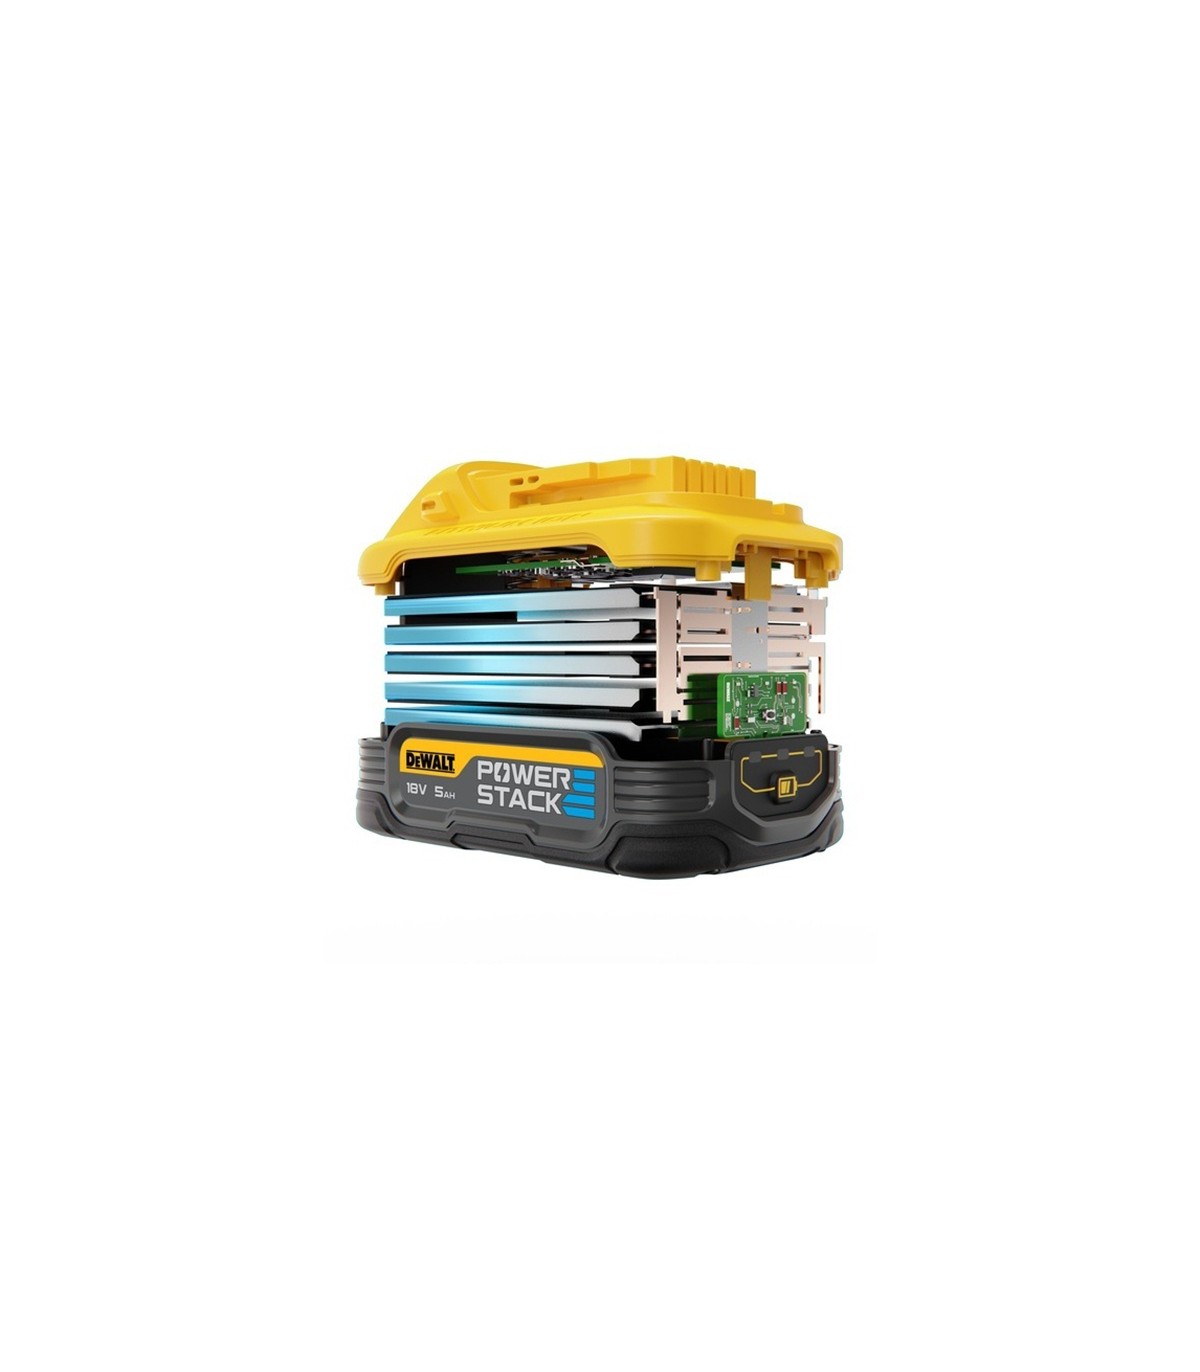 Batterie 18V 5Ah POWERSTACK DEWALT : Ref. DCBP518-XJ